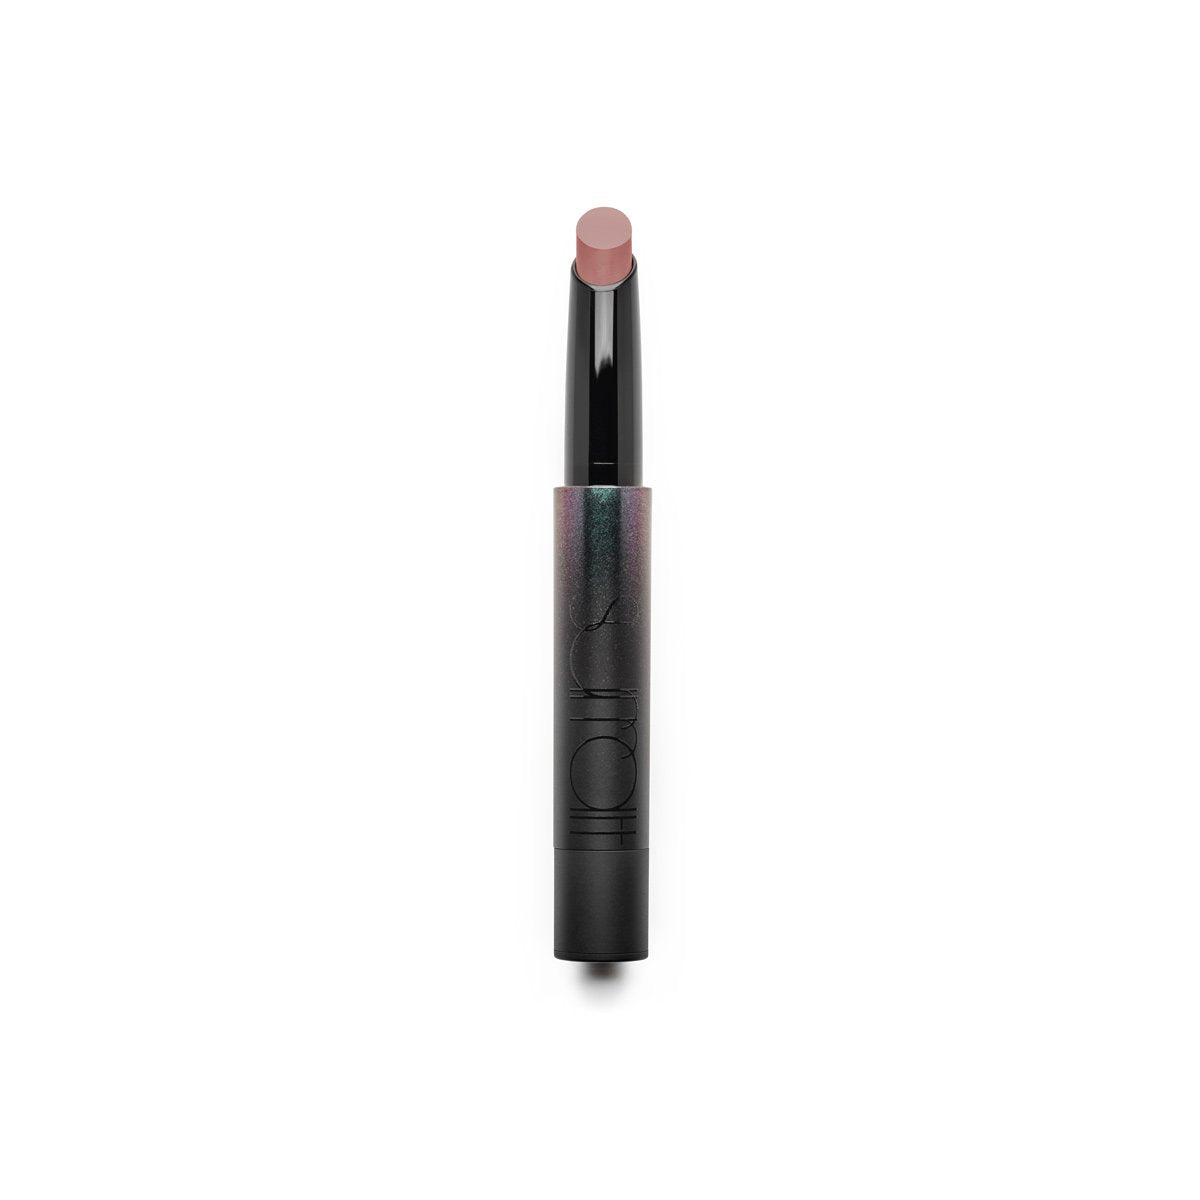 HEVYN - COOL BEIGEY ROSE - creamy moisturizing lipstick lip balm in cool beige rose shade